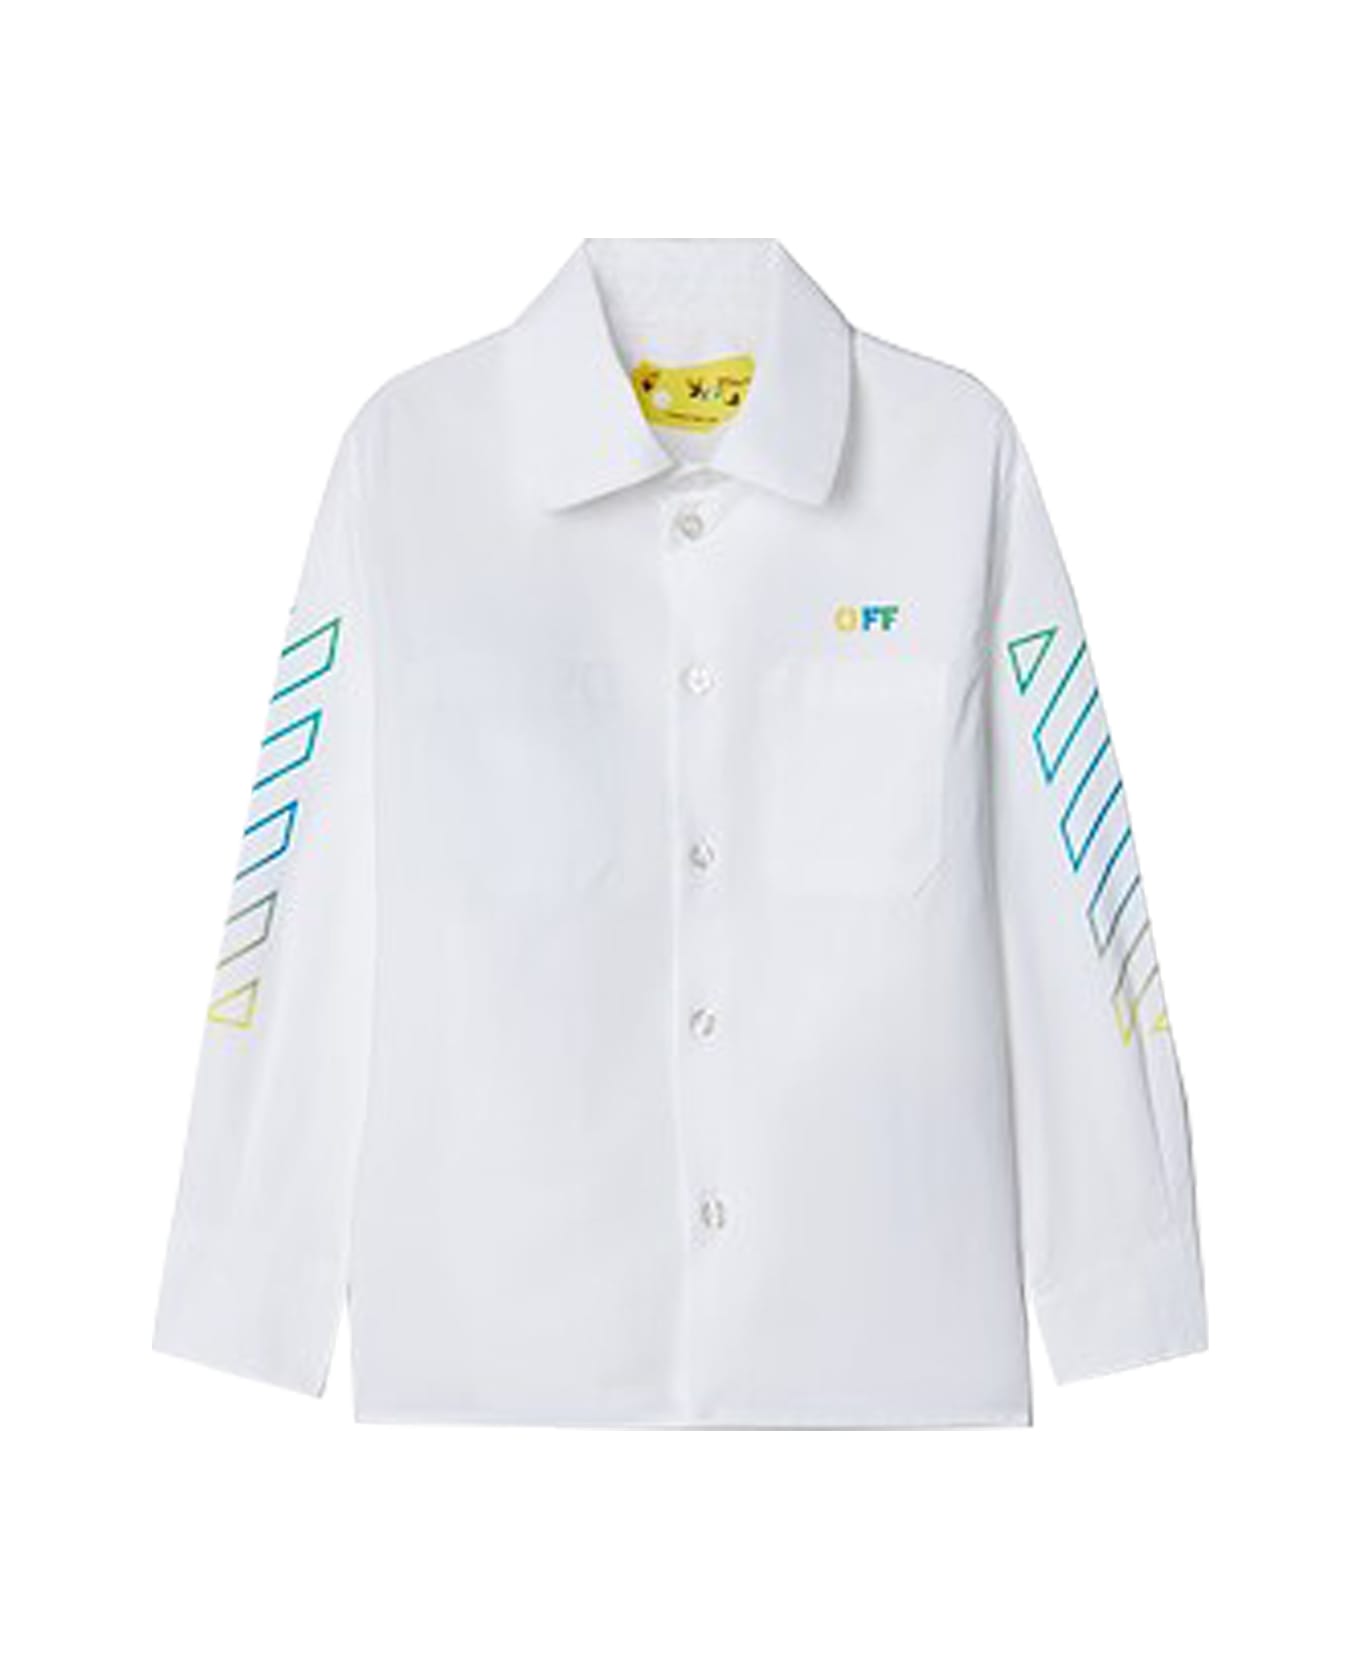 Off-White Shirt With Arrow Rainbow Motif - White